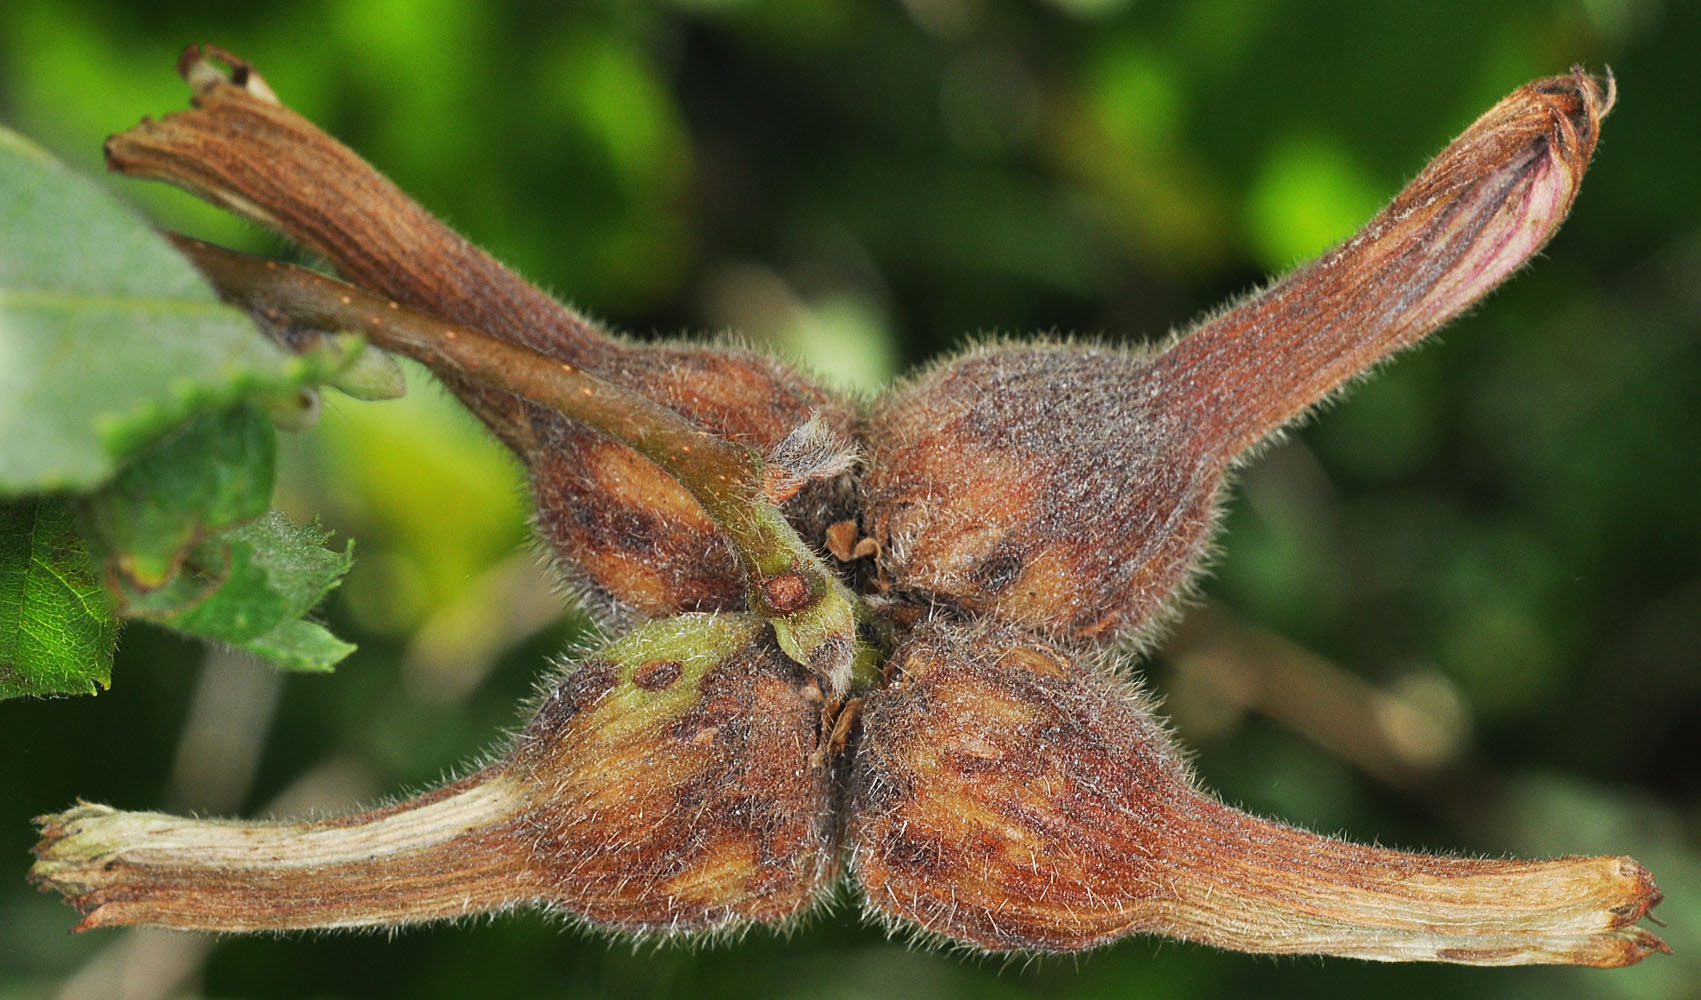 Flora of Eastern Washington Image: Corylus cornuta